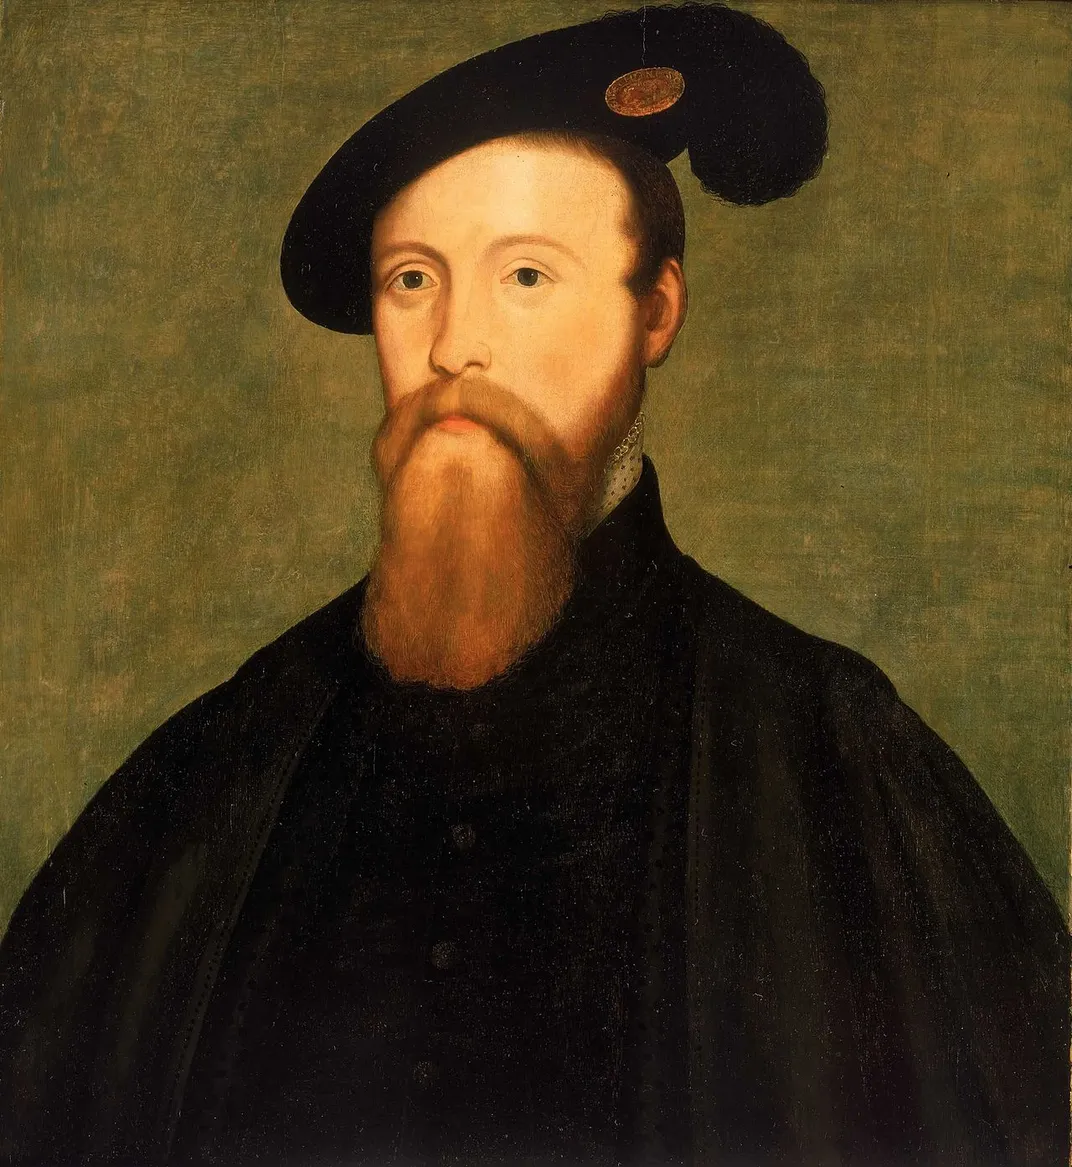 Catherine Parr's fourth husband, Thomas Seymour